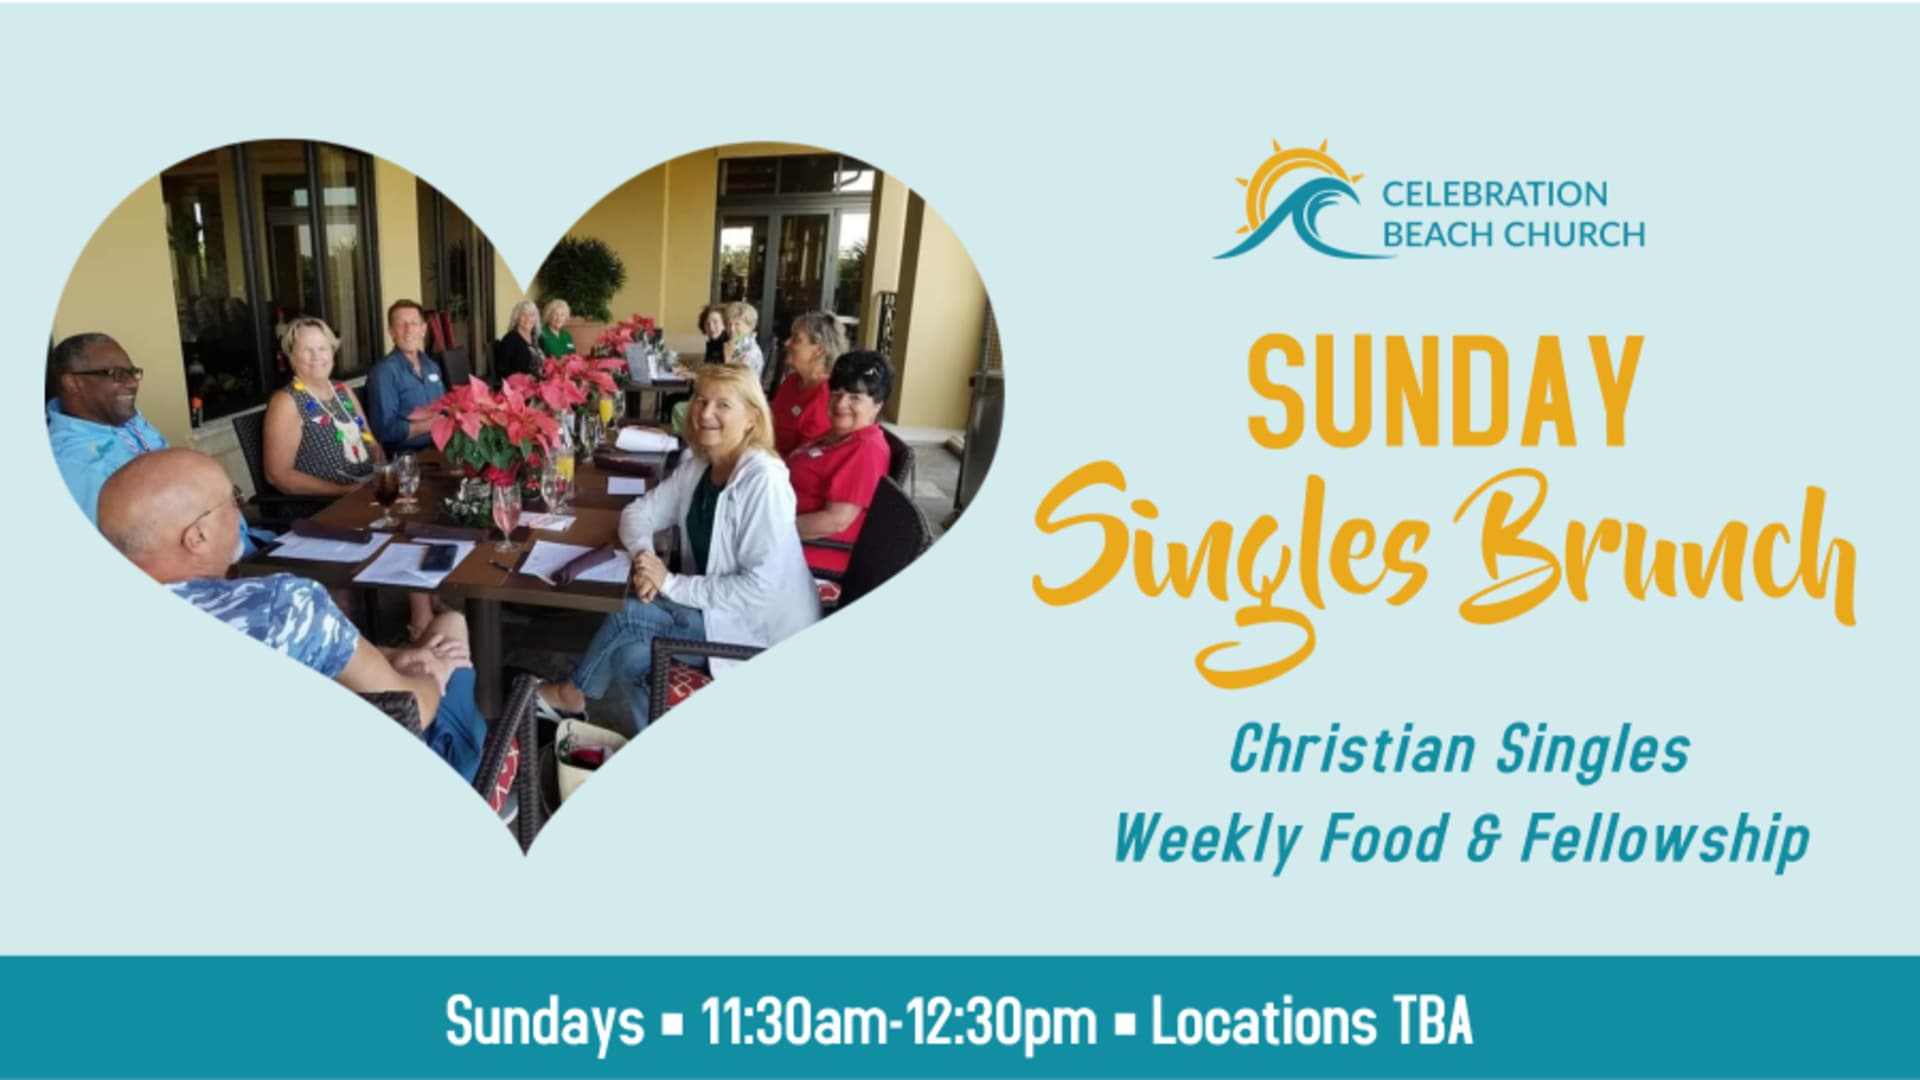 Sunday Singles Brunch Celebration Beach Church